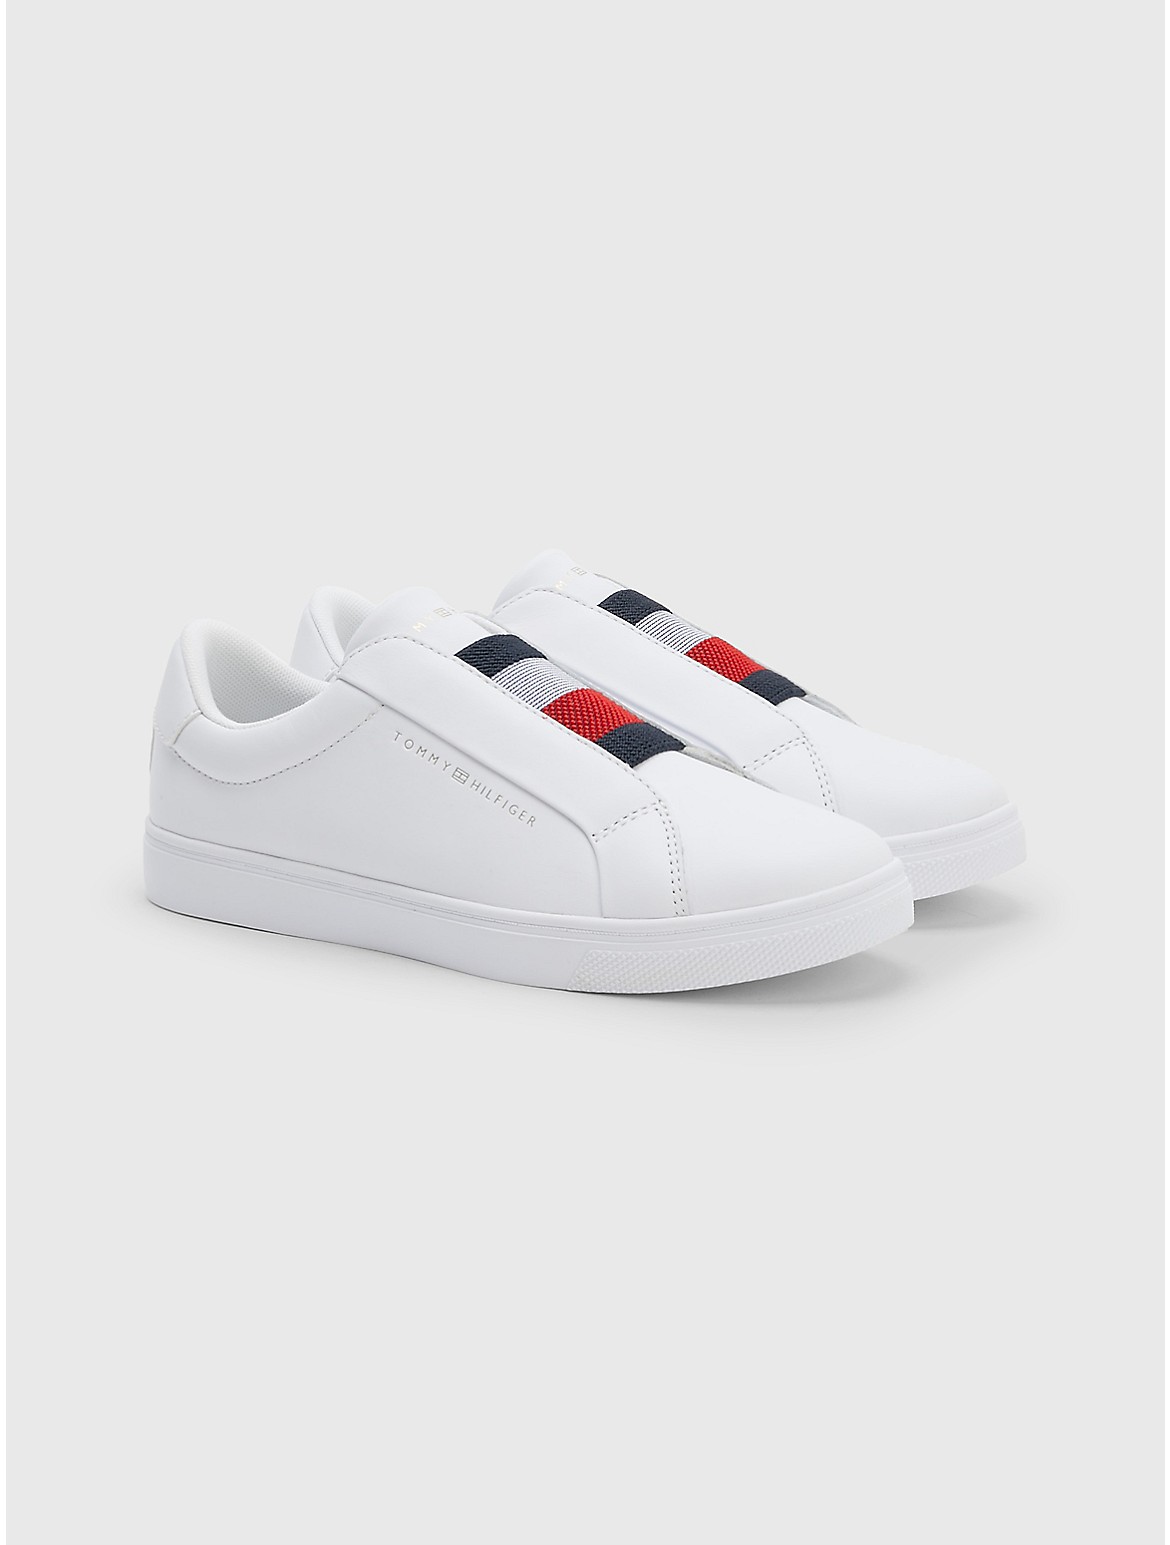 Tommy Hilfiger Women's Leather Slip-On Sneaker - White - 9